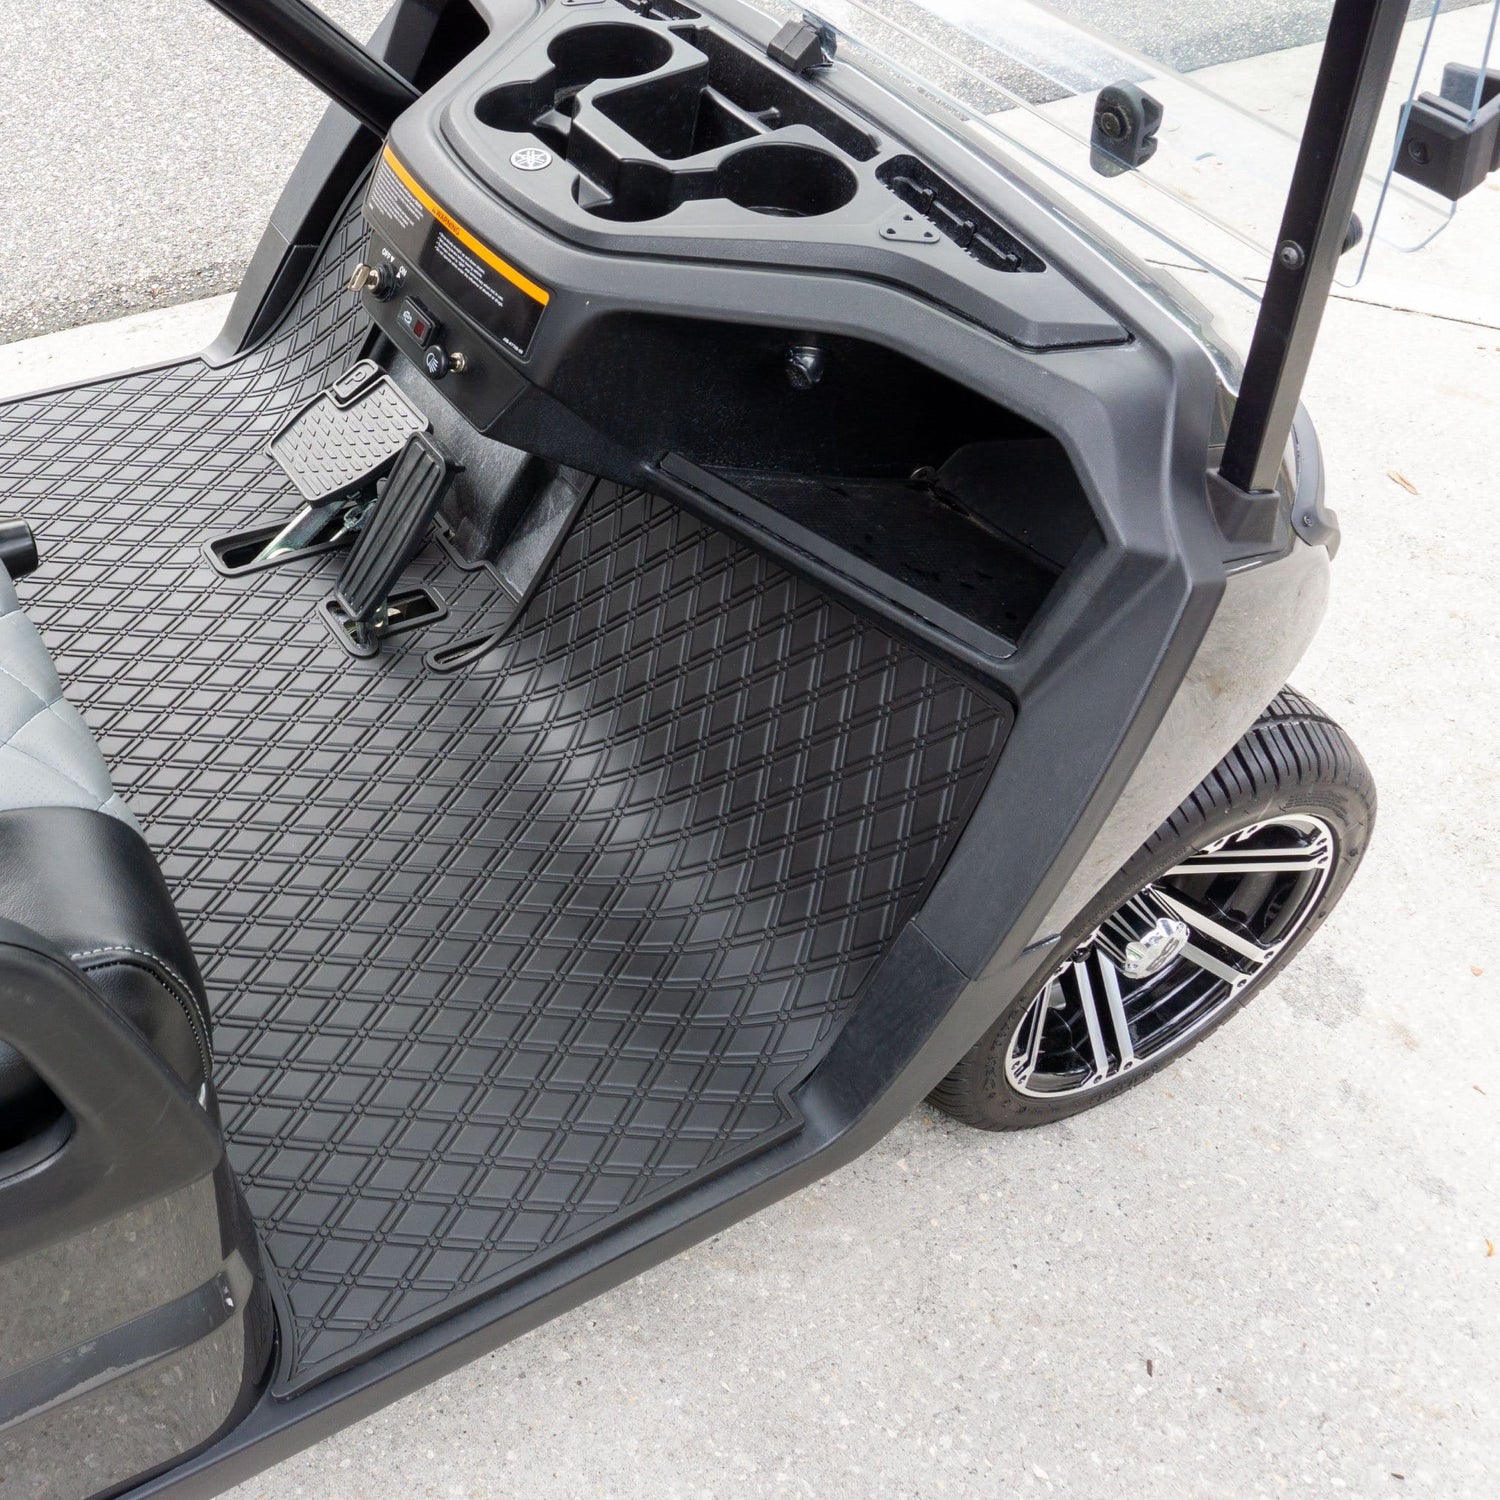 Floor Mats For Yamaha G14 | G22 | G29 (Drive) | Drive2 Golf Carts